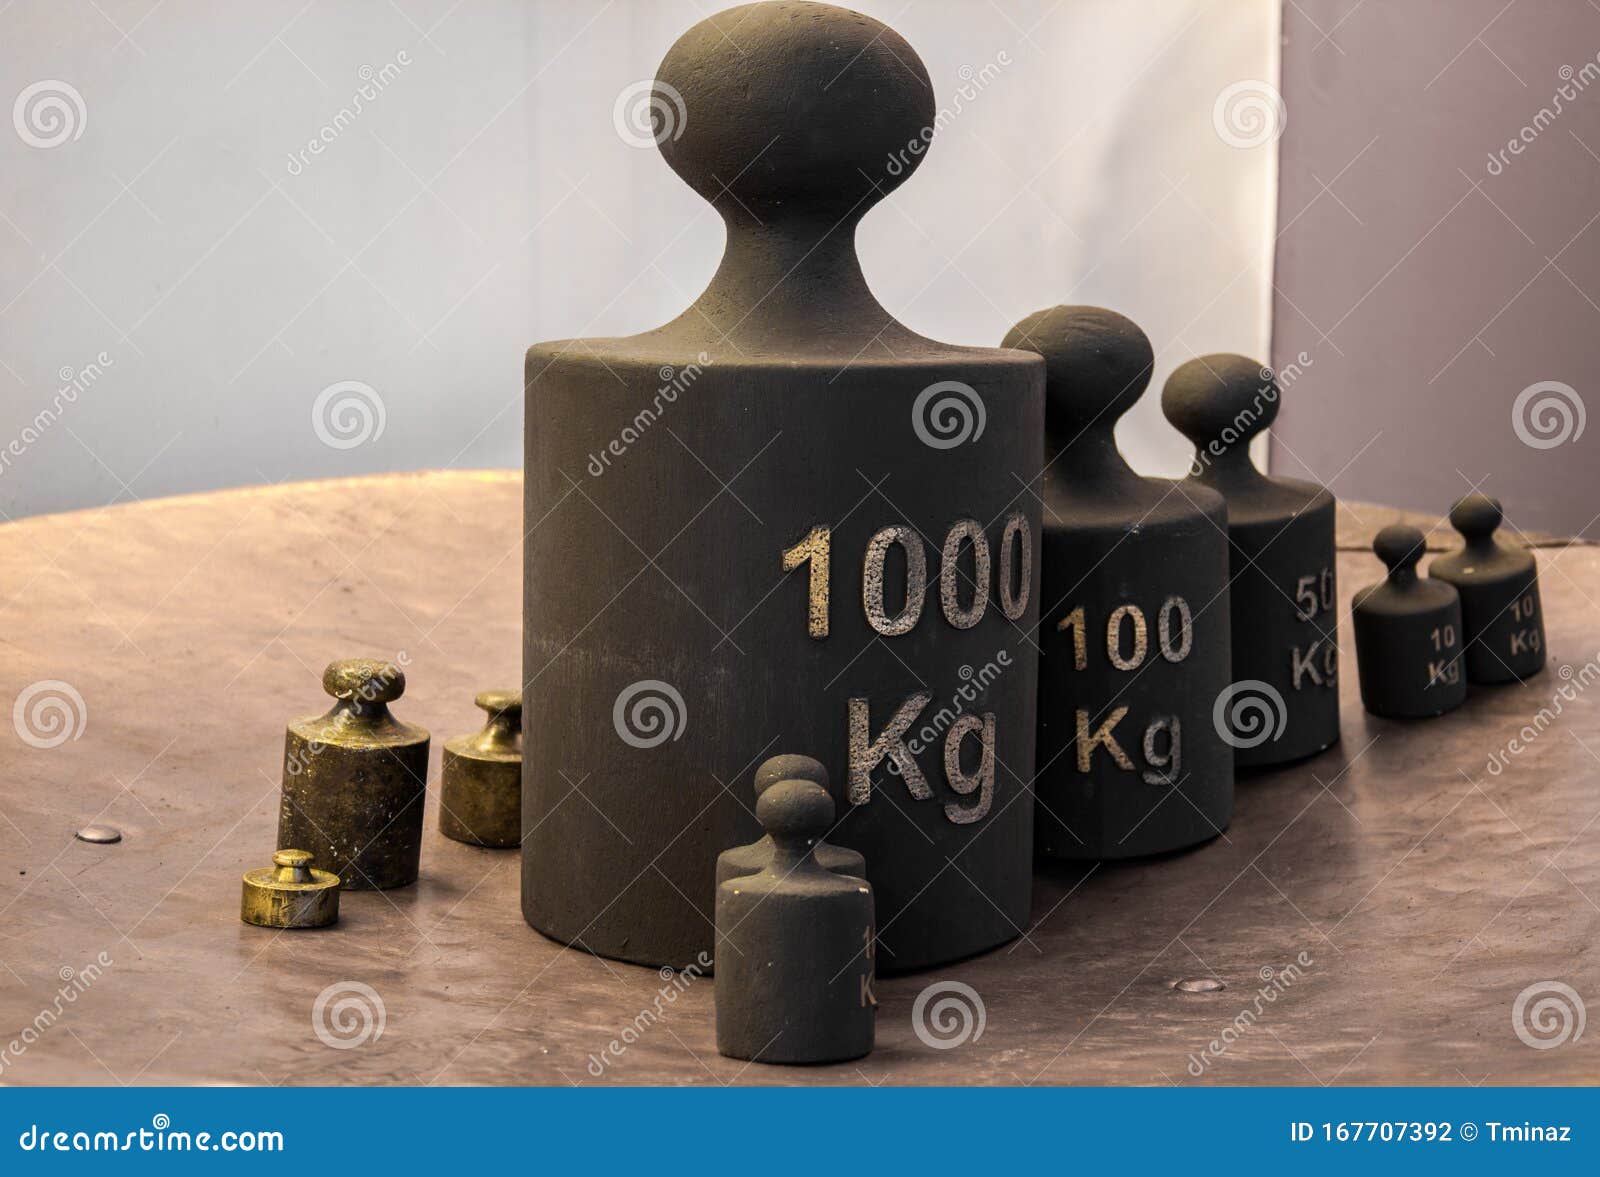 old iron weight measurement units. kilogram